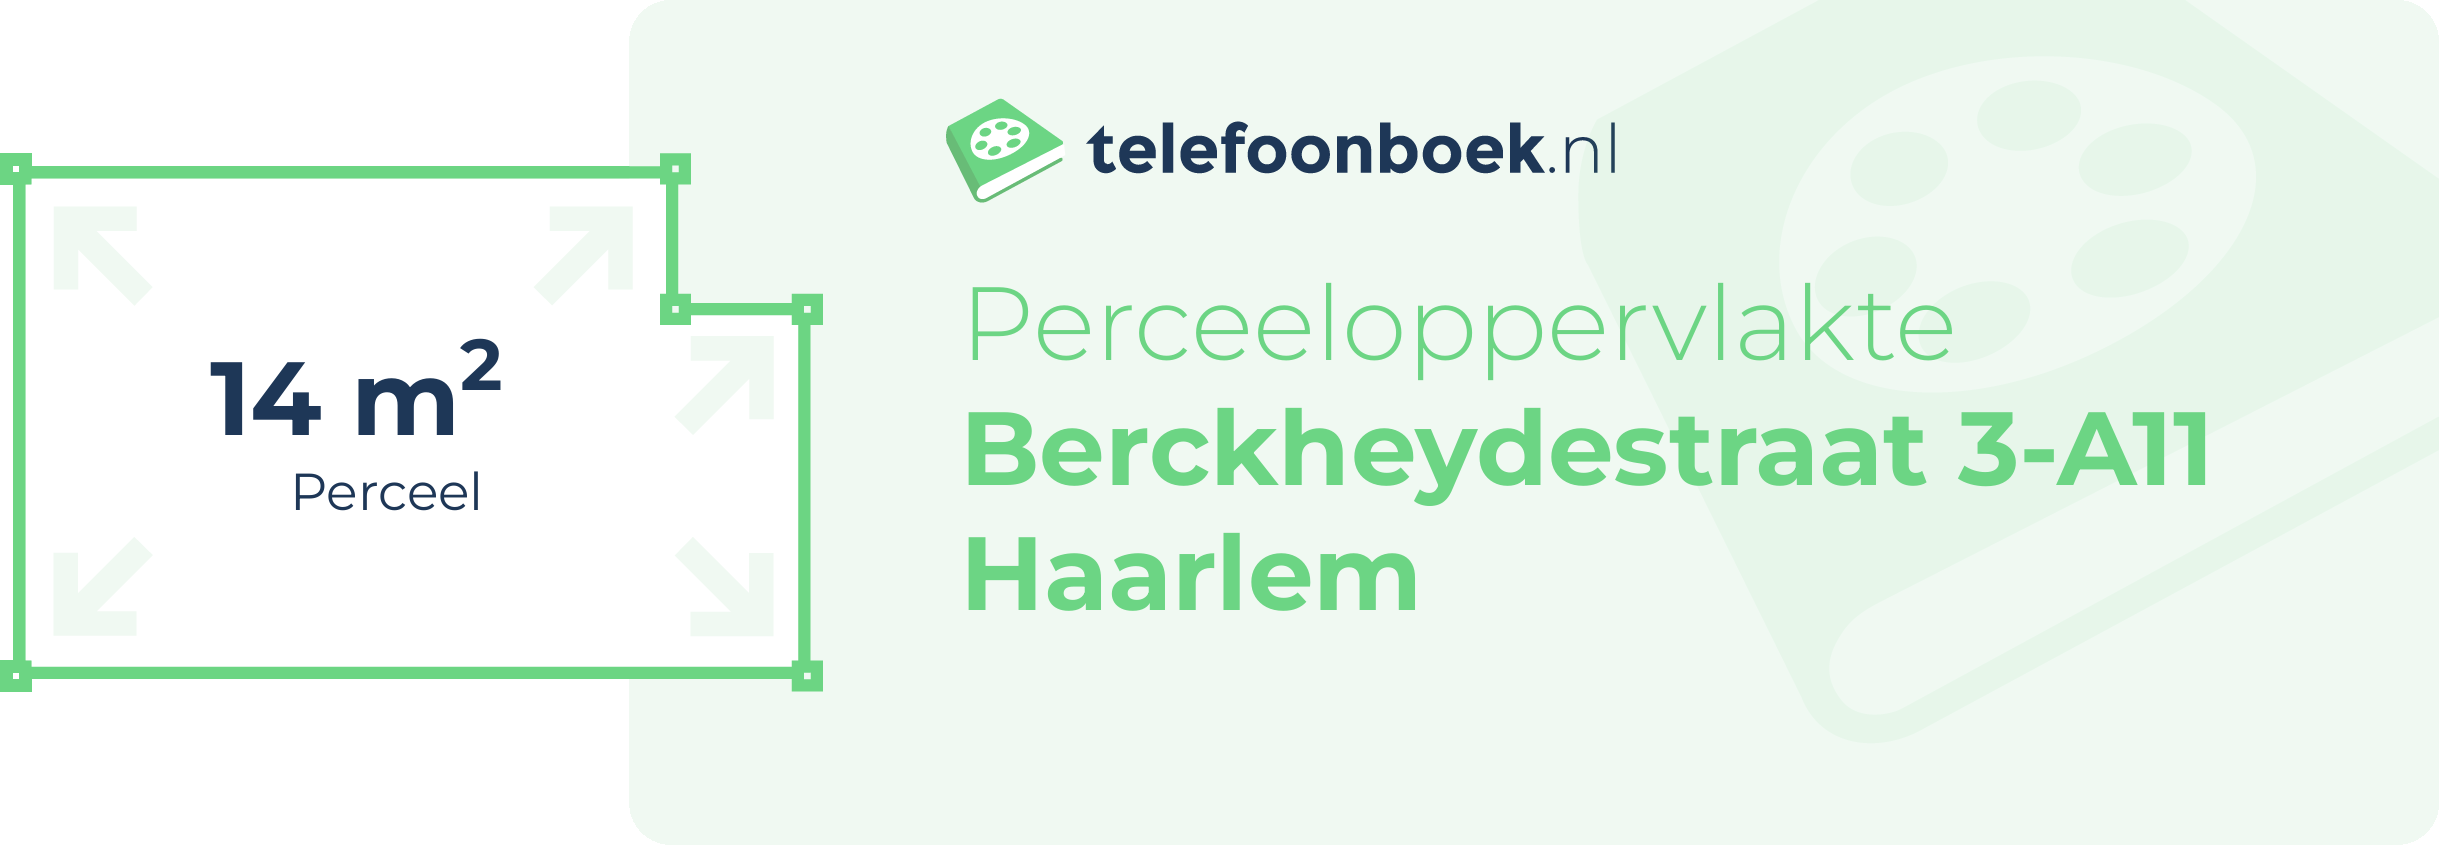 Perceeloppervlakte Berckheydestraat 3-A11 Haarlem